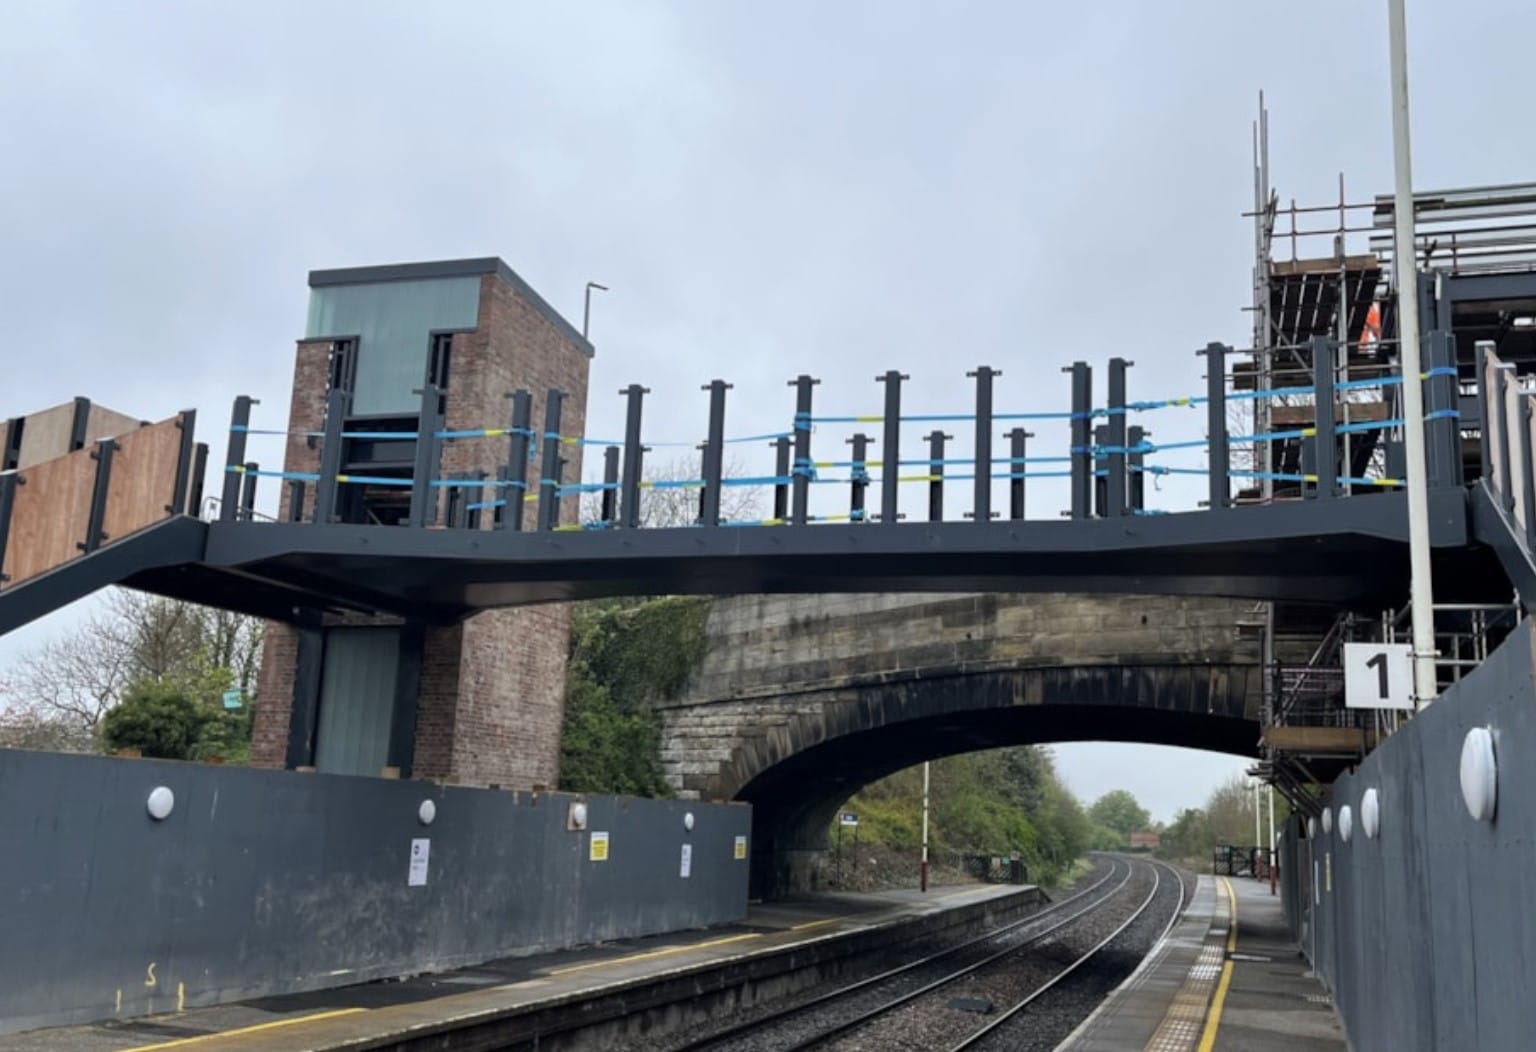 Major milestone reached for UK’s first ‘Beacon’ bridge at Garforth as bridge deck installed